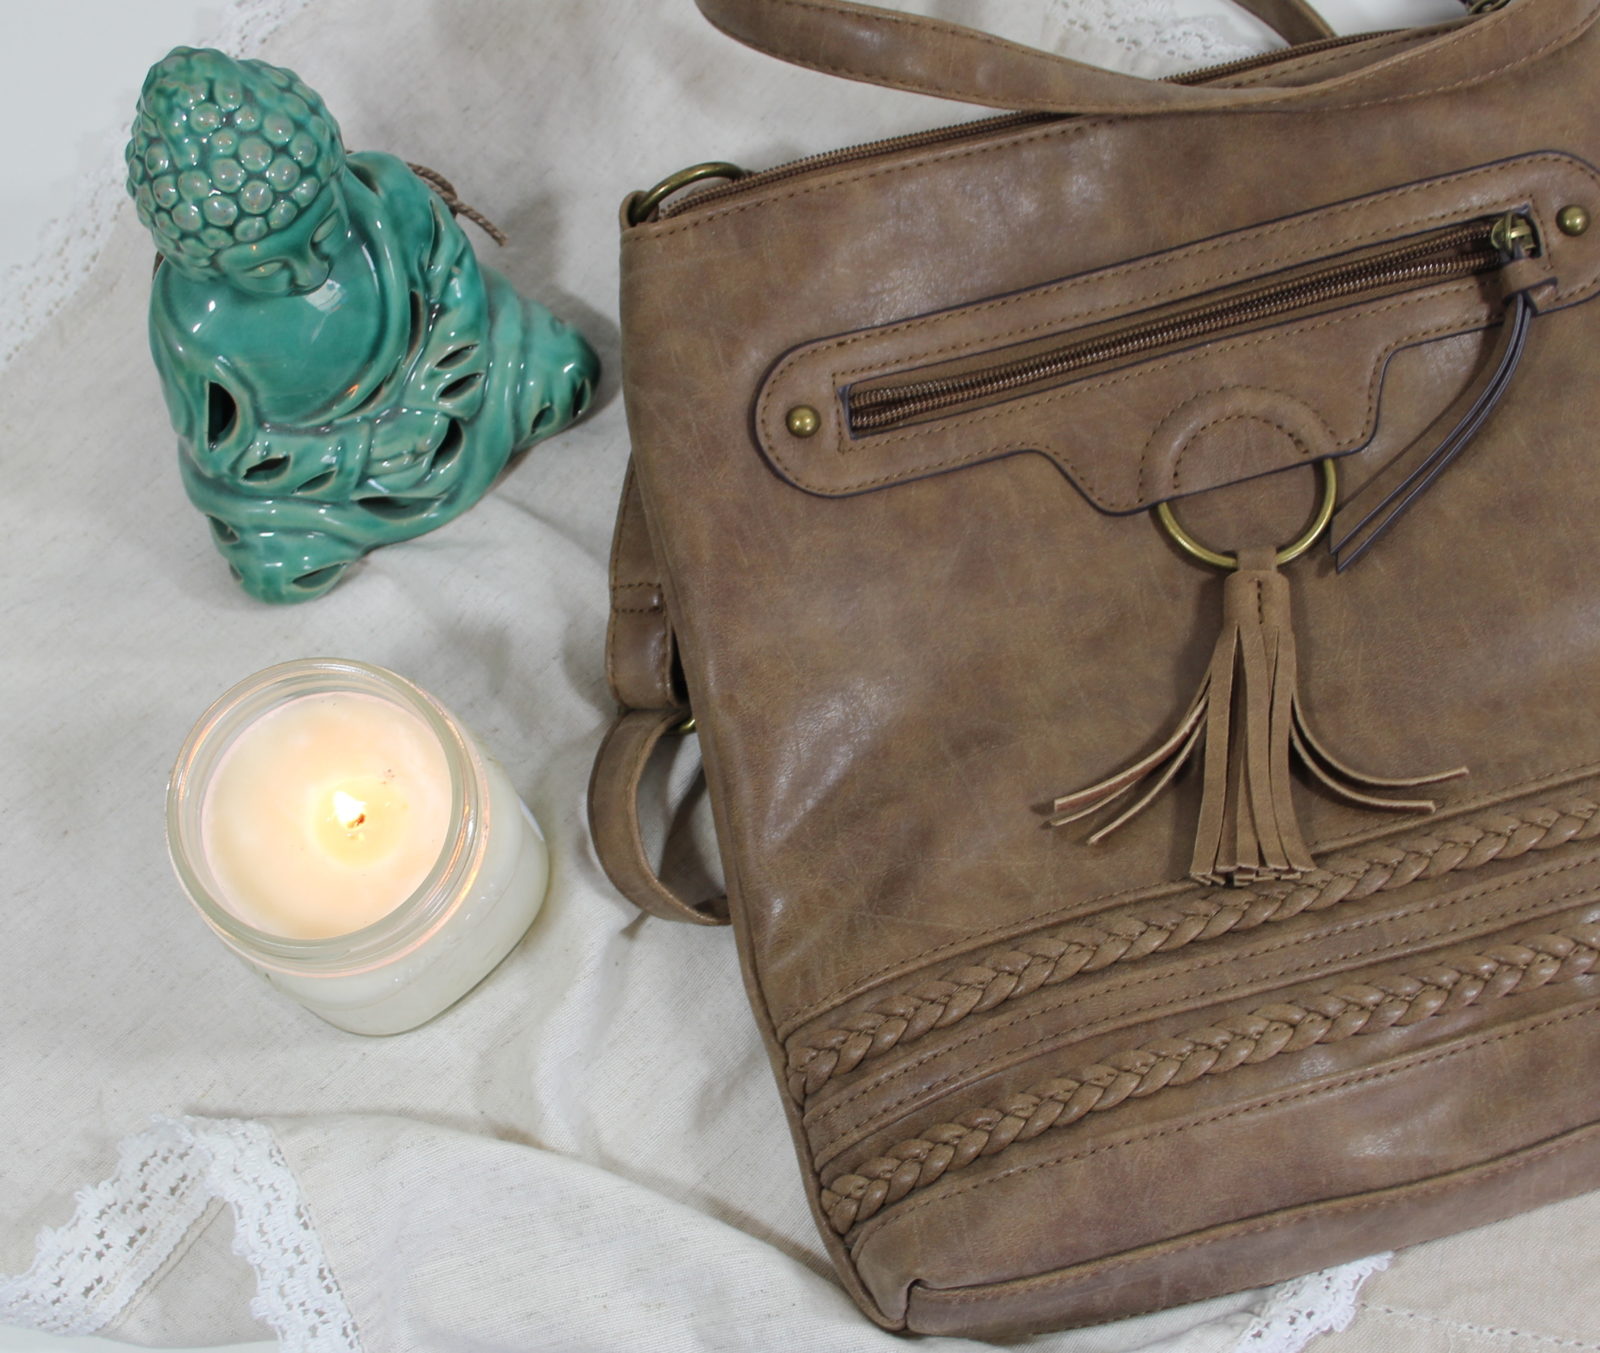 New A&I Handbags at Shopko + Enter to Win a $500 Shopping Spree